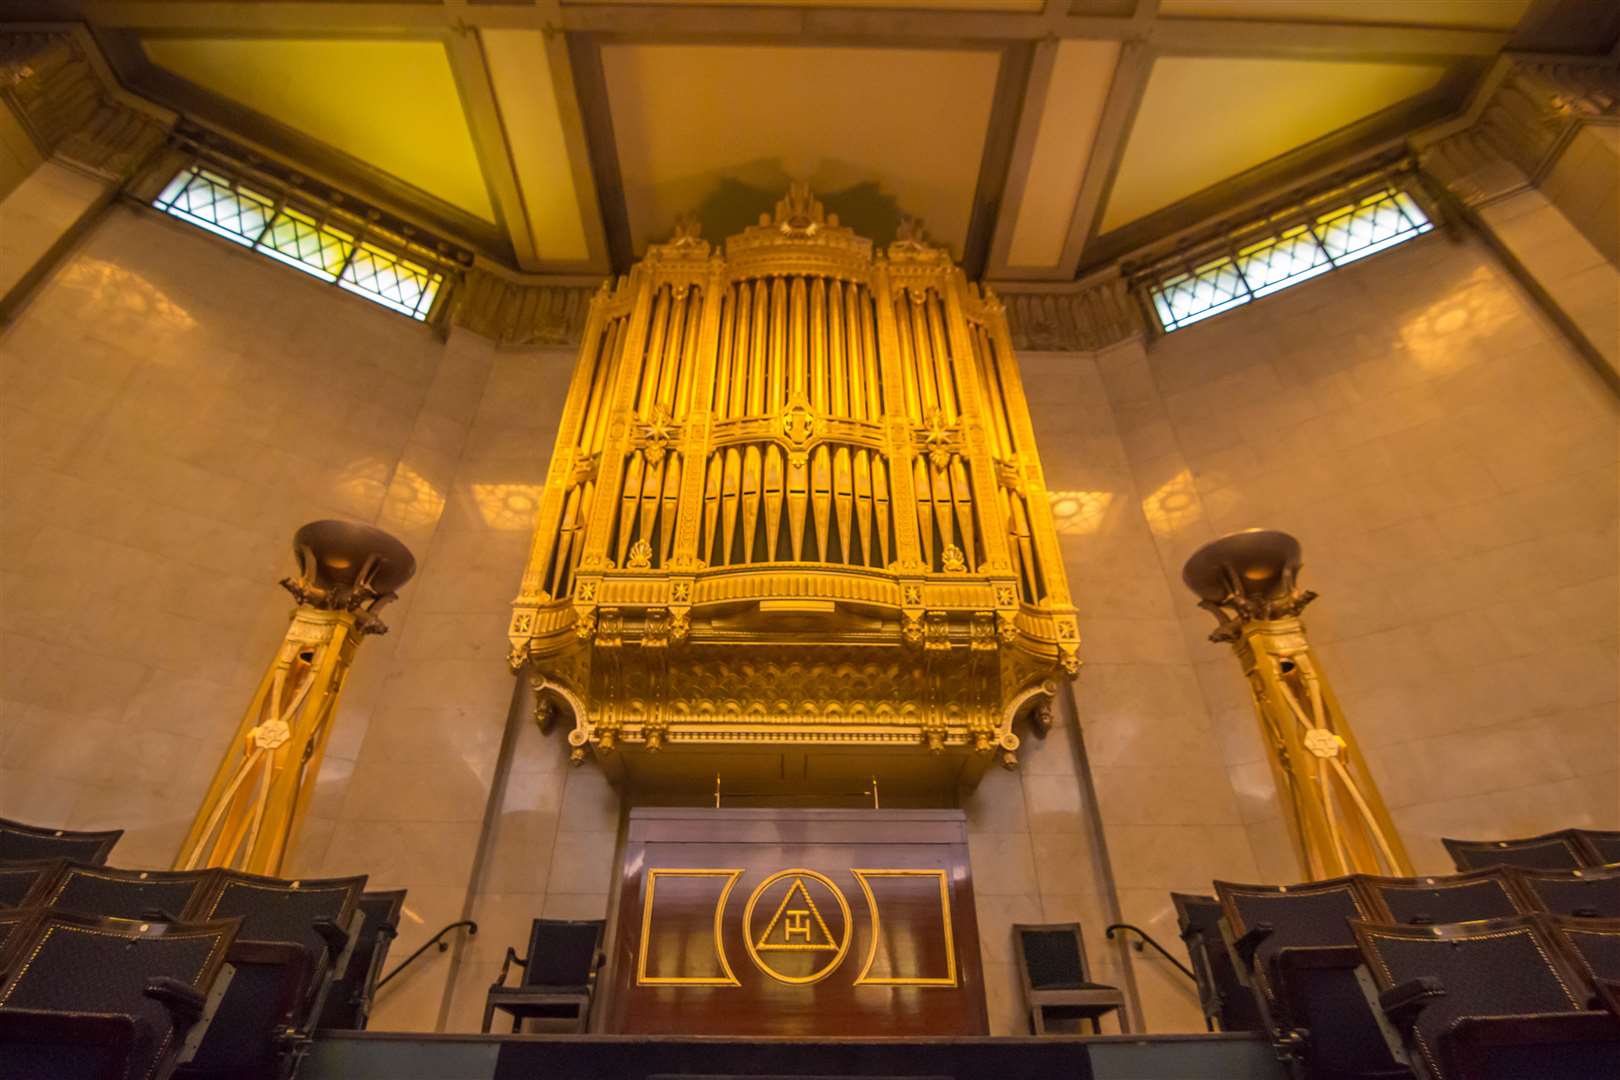 The Organ.